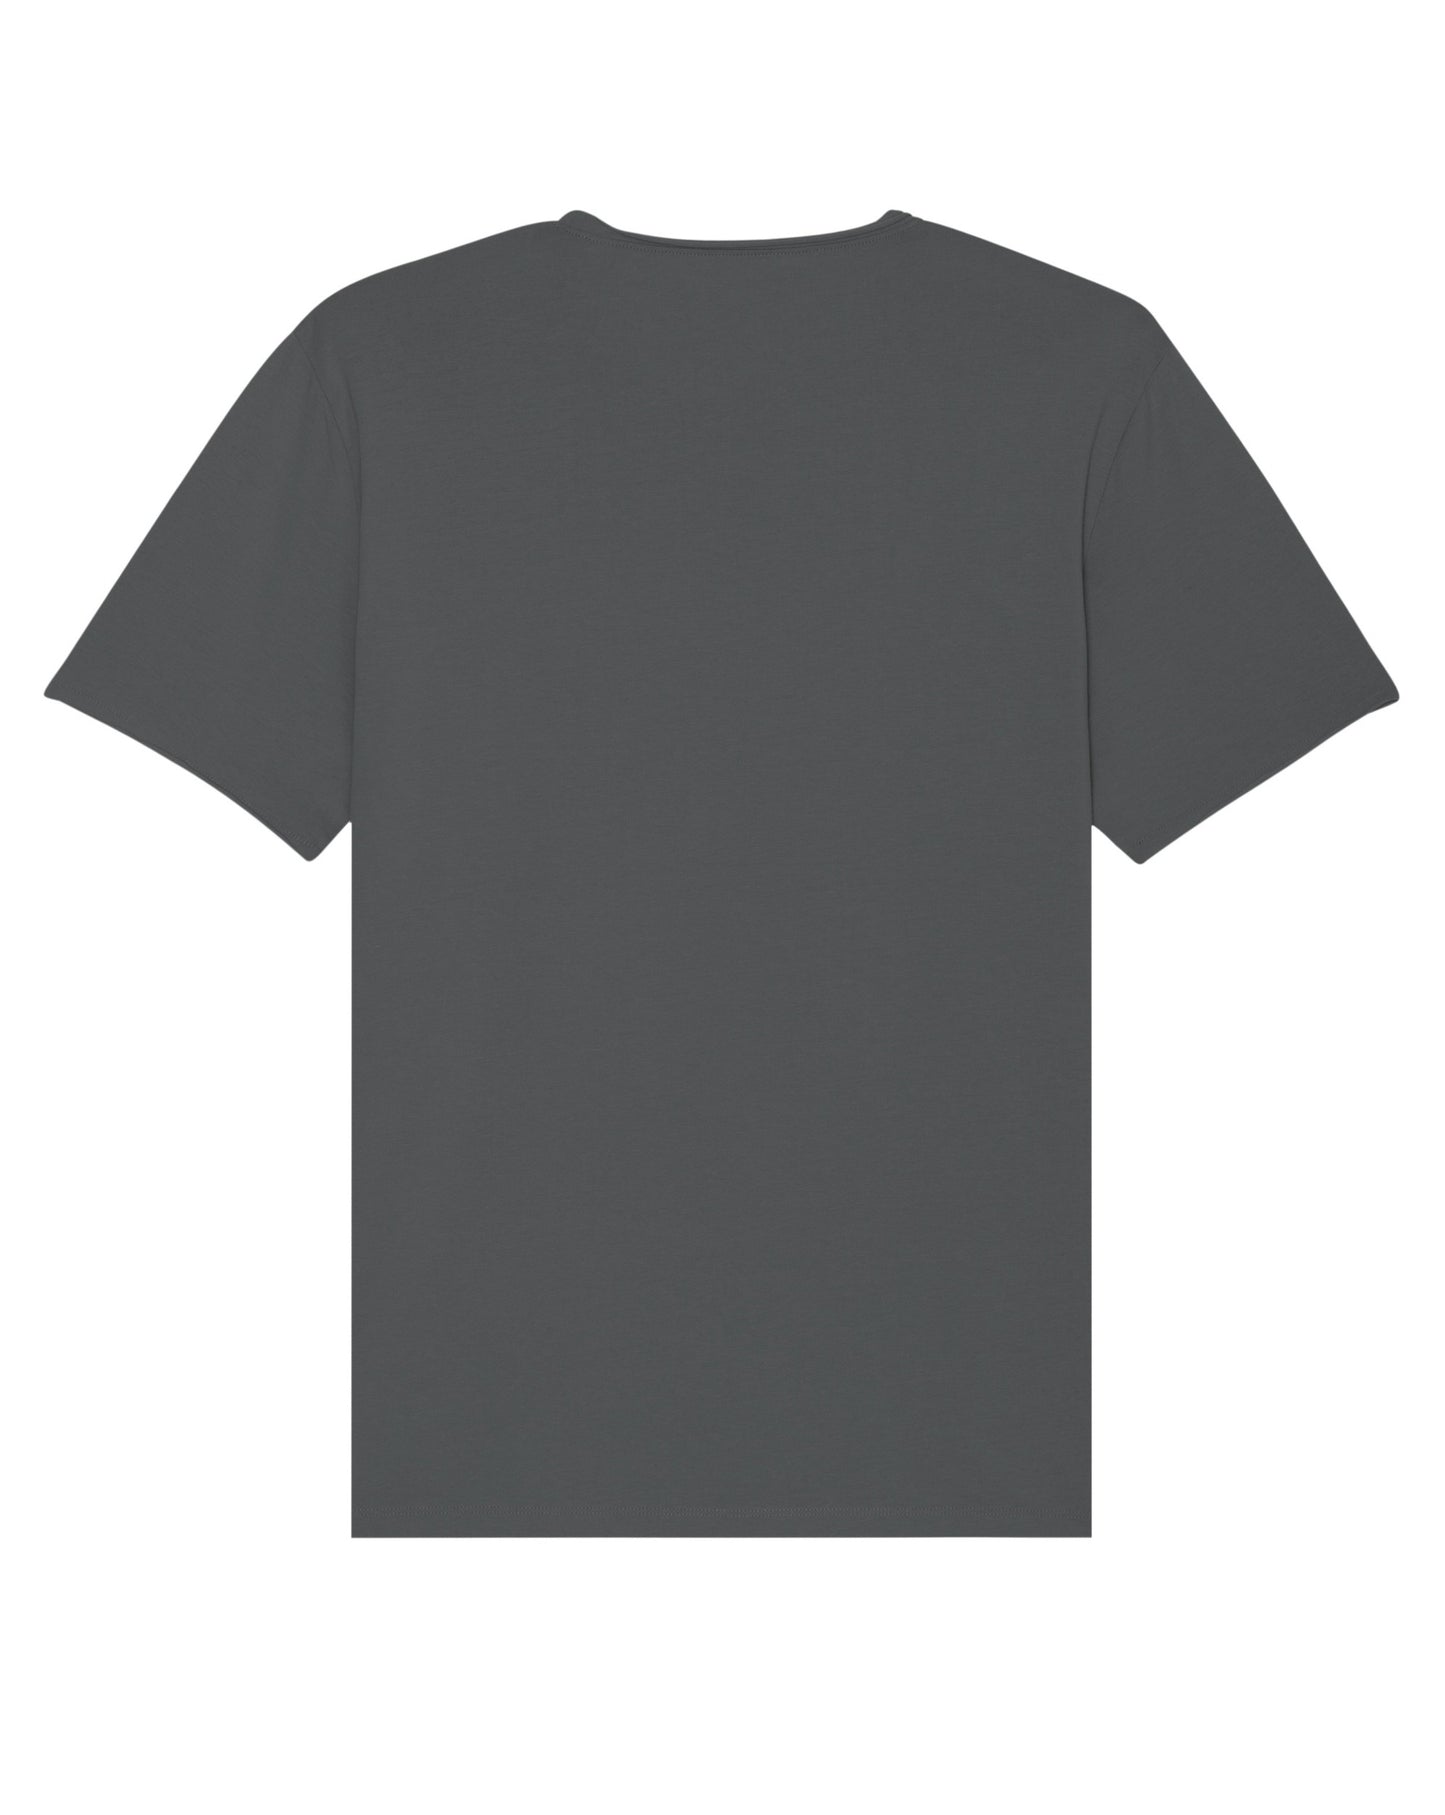 Hang Ten Raw Surfer T-shirt - Anthracite Gray